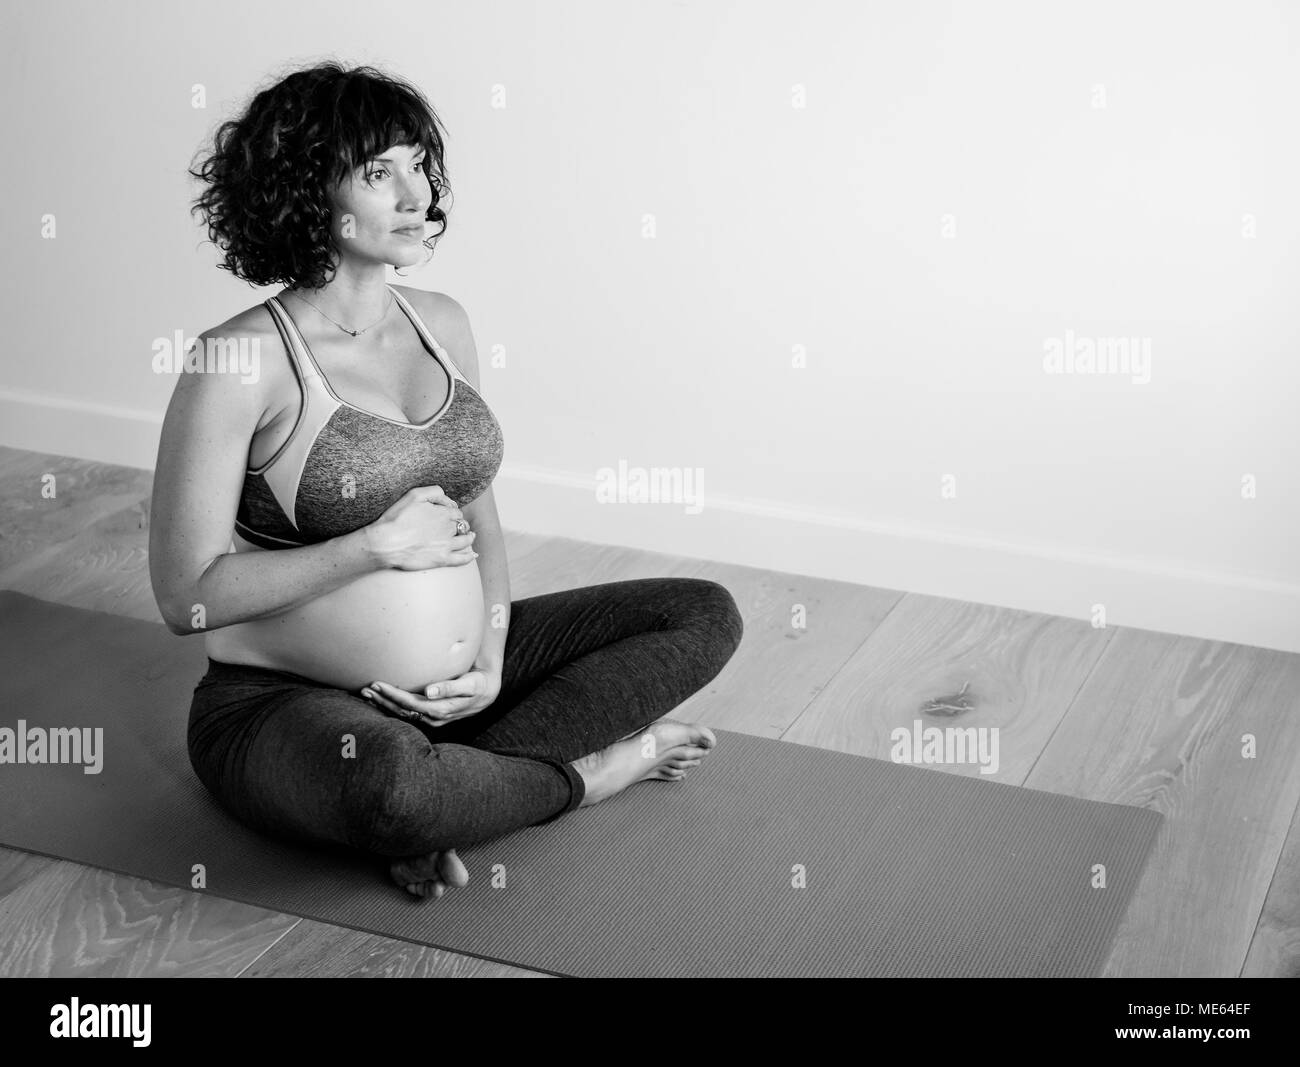 Pregnant woman doing light exercise Stock Photo